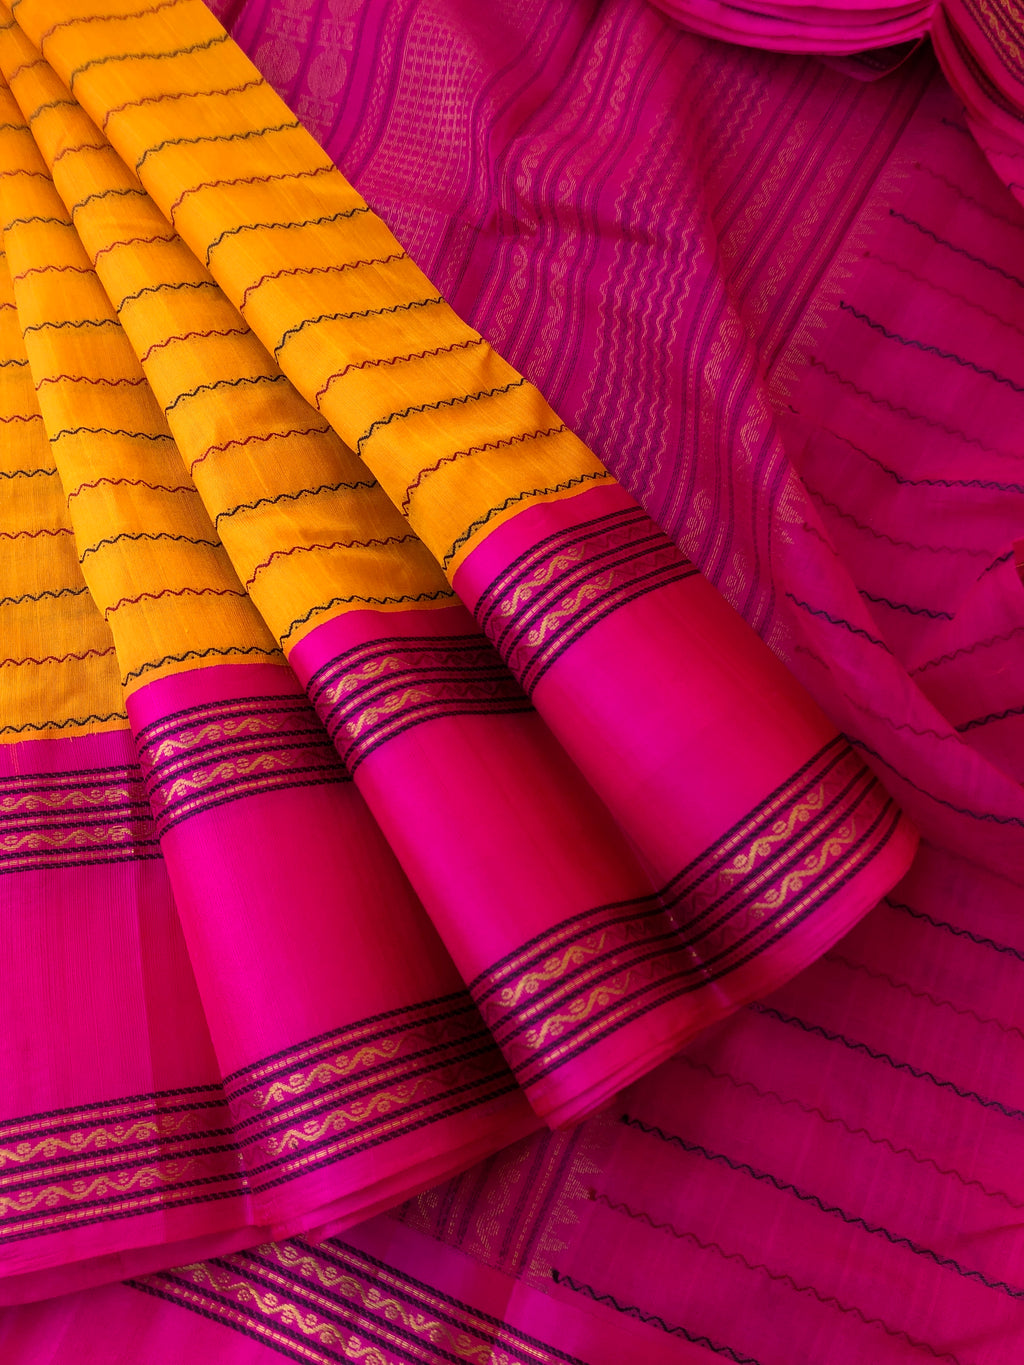 Divyam - Korvai Silk Cotton with Pure Silk Woven Borders - stunning mango yellow and pink veldhari